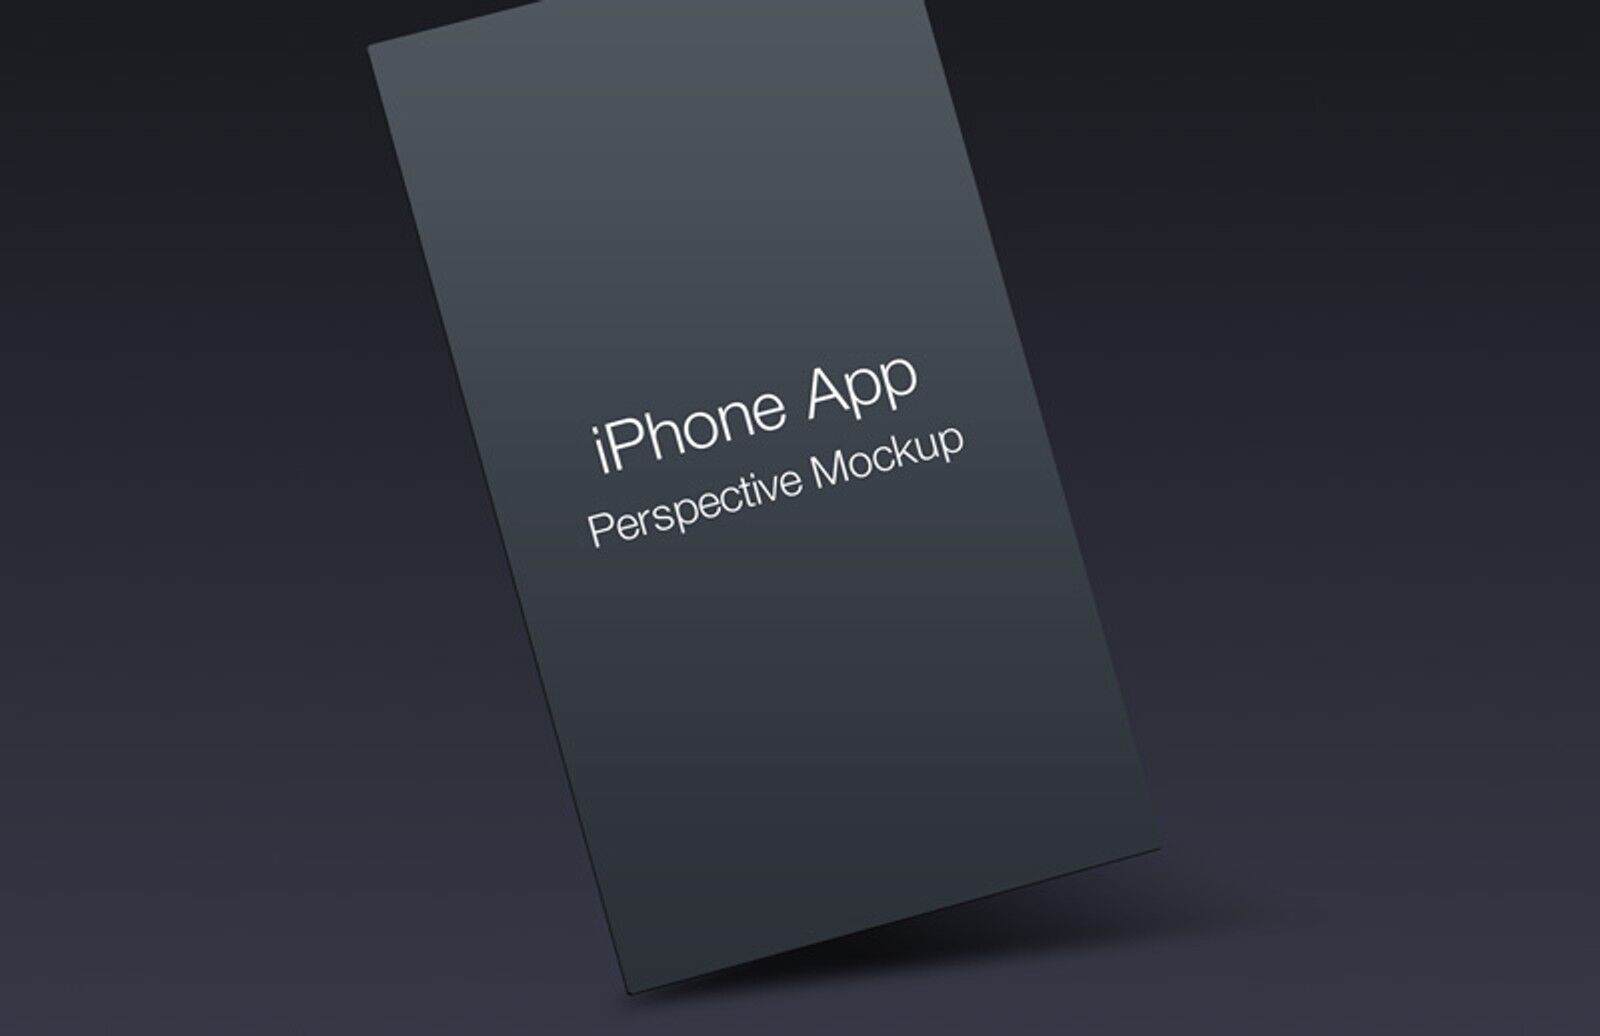 iPhone App UI Perspective Mockup FREE PSD